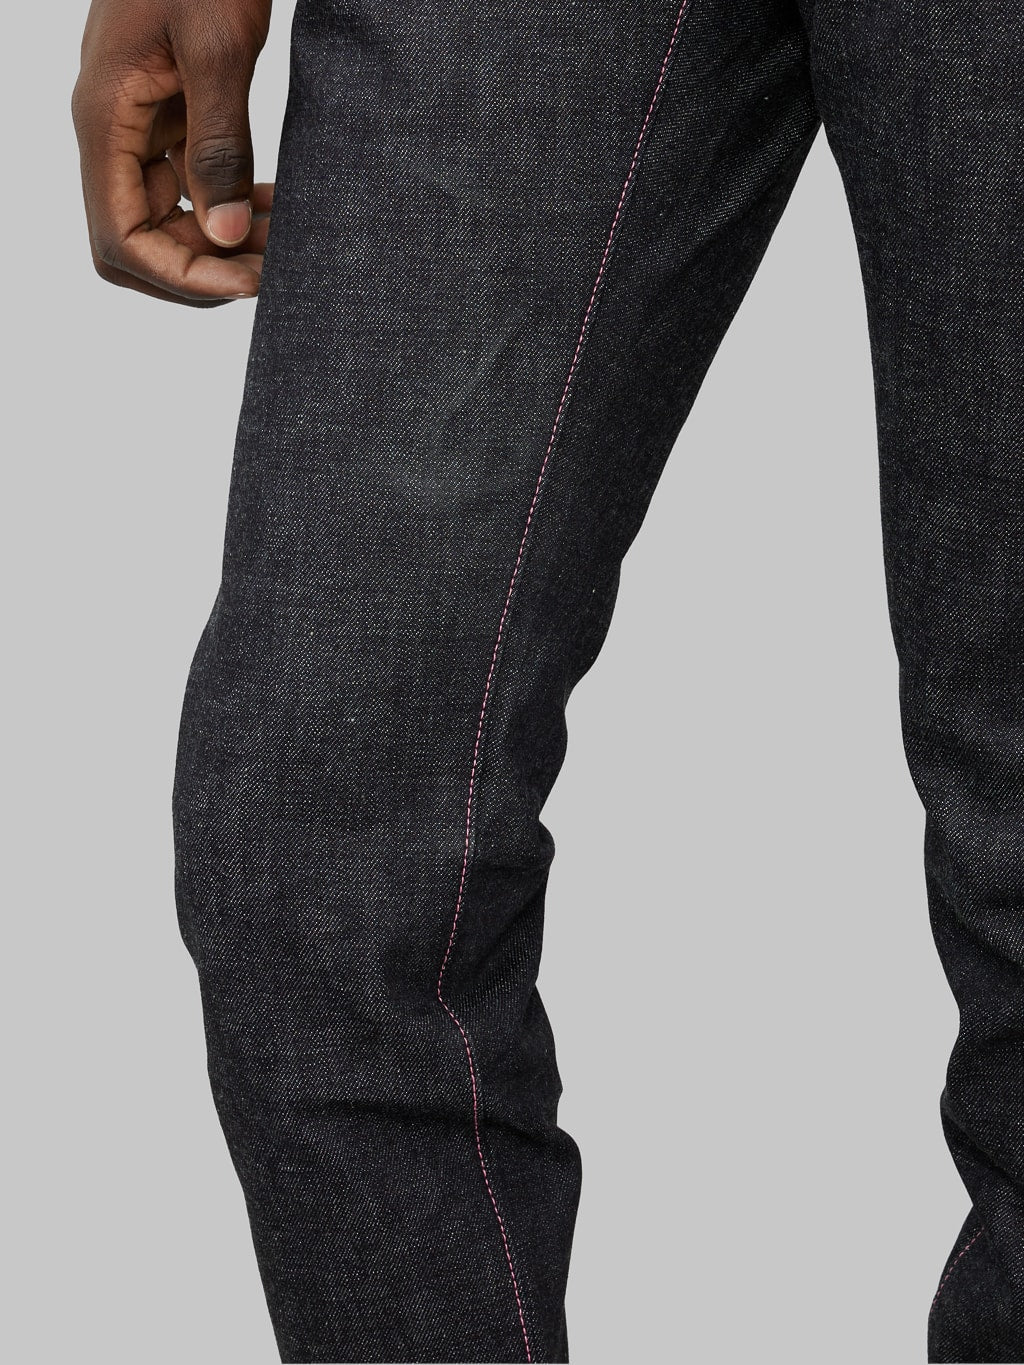 momotaro jeans 0405 v selvedge denim high tapered inseam